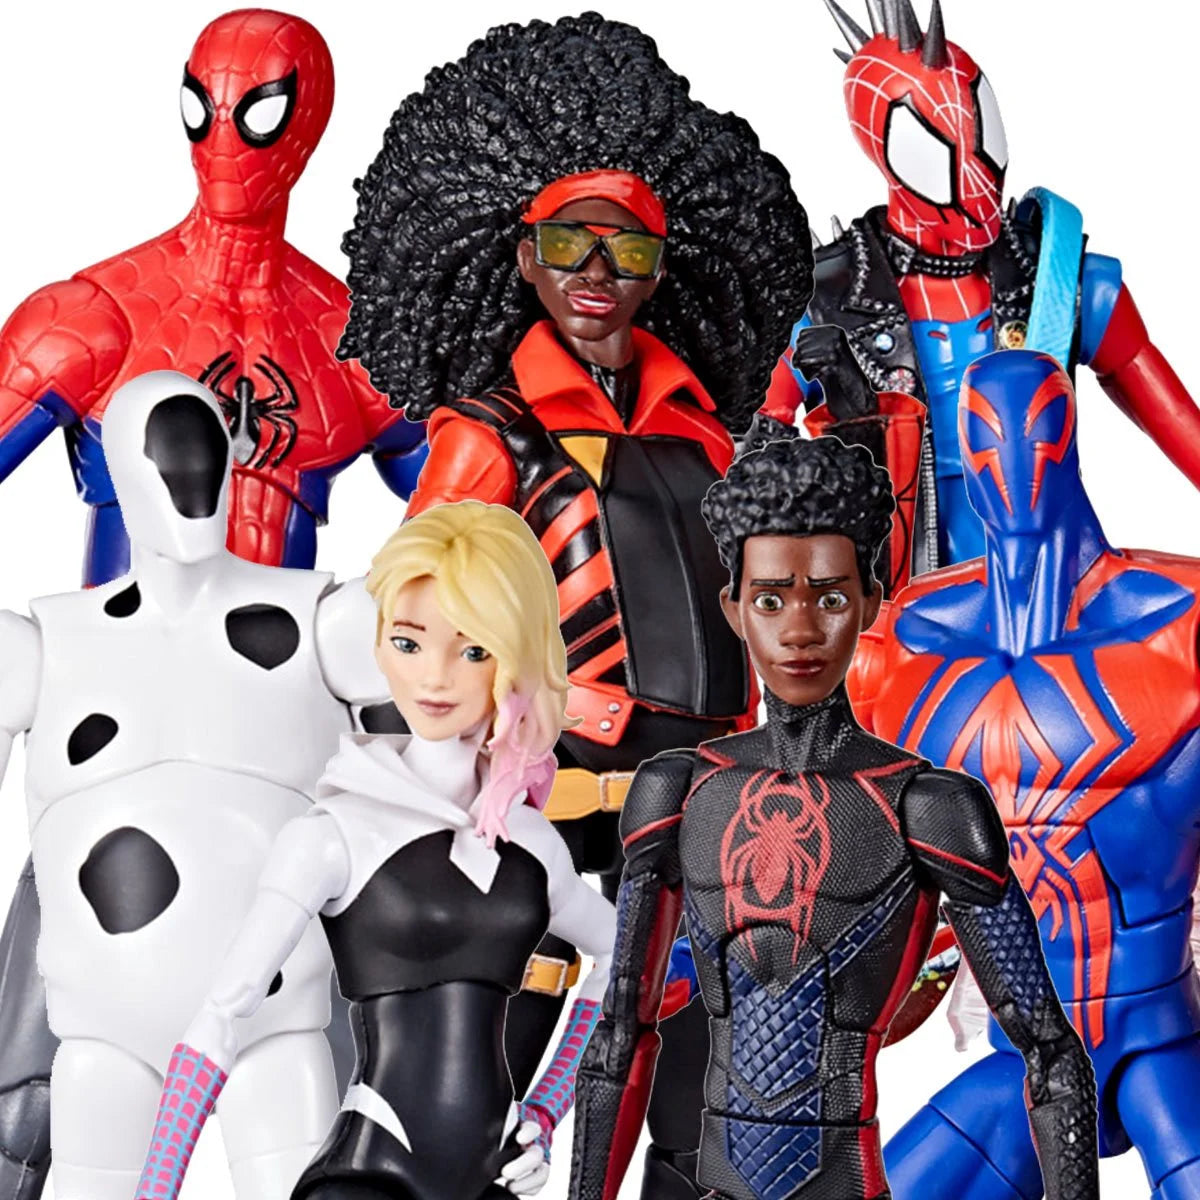 Marvel Legends Spider-Man Across The Spider-Verse Wave 1 Case of 7 Action Figures